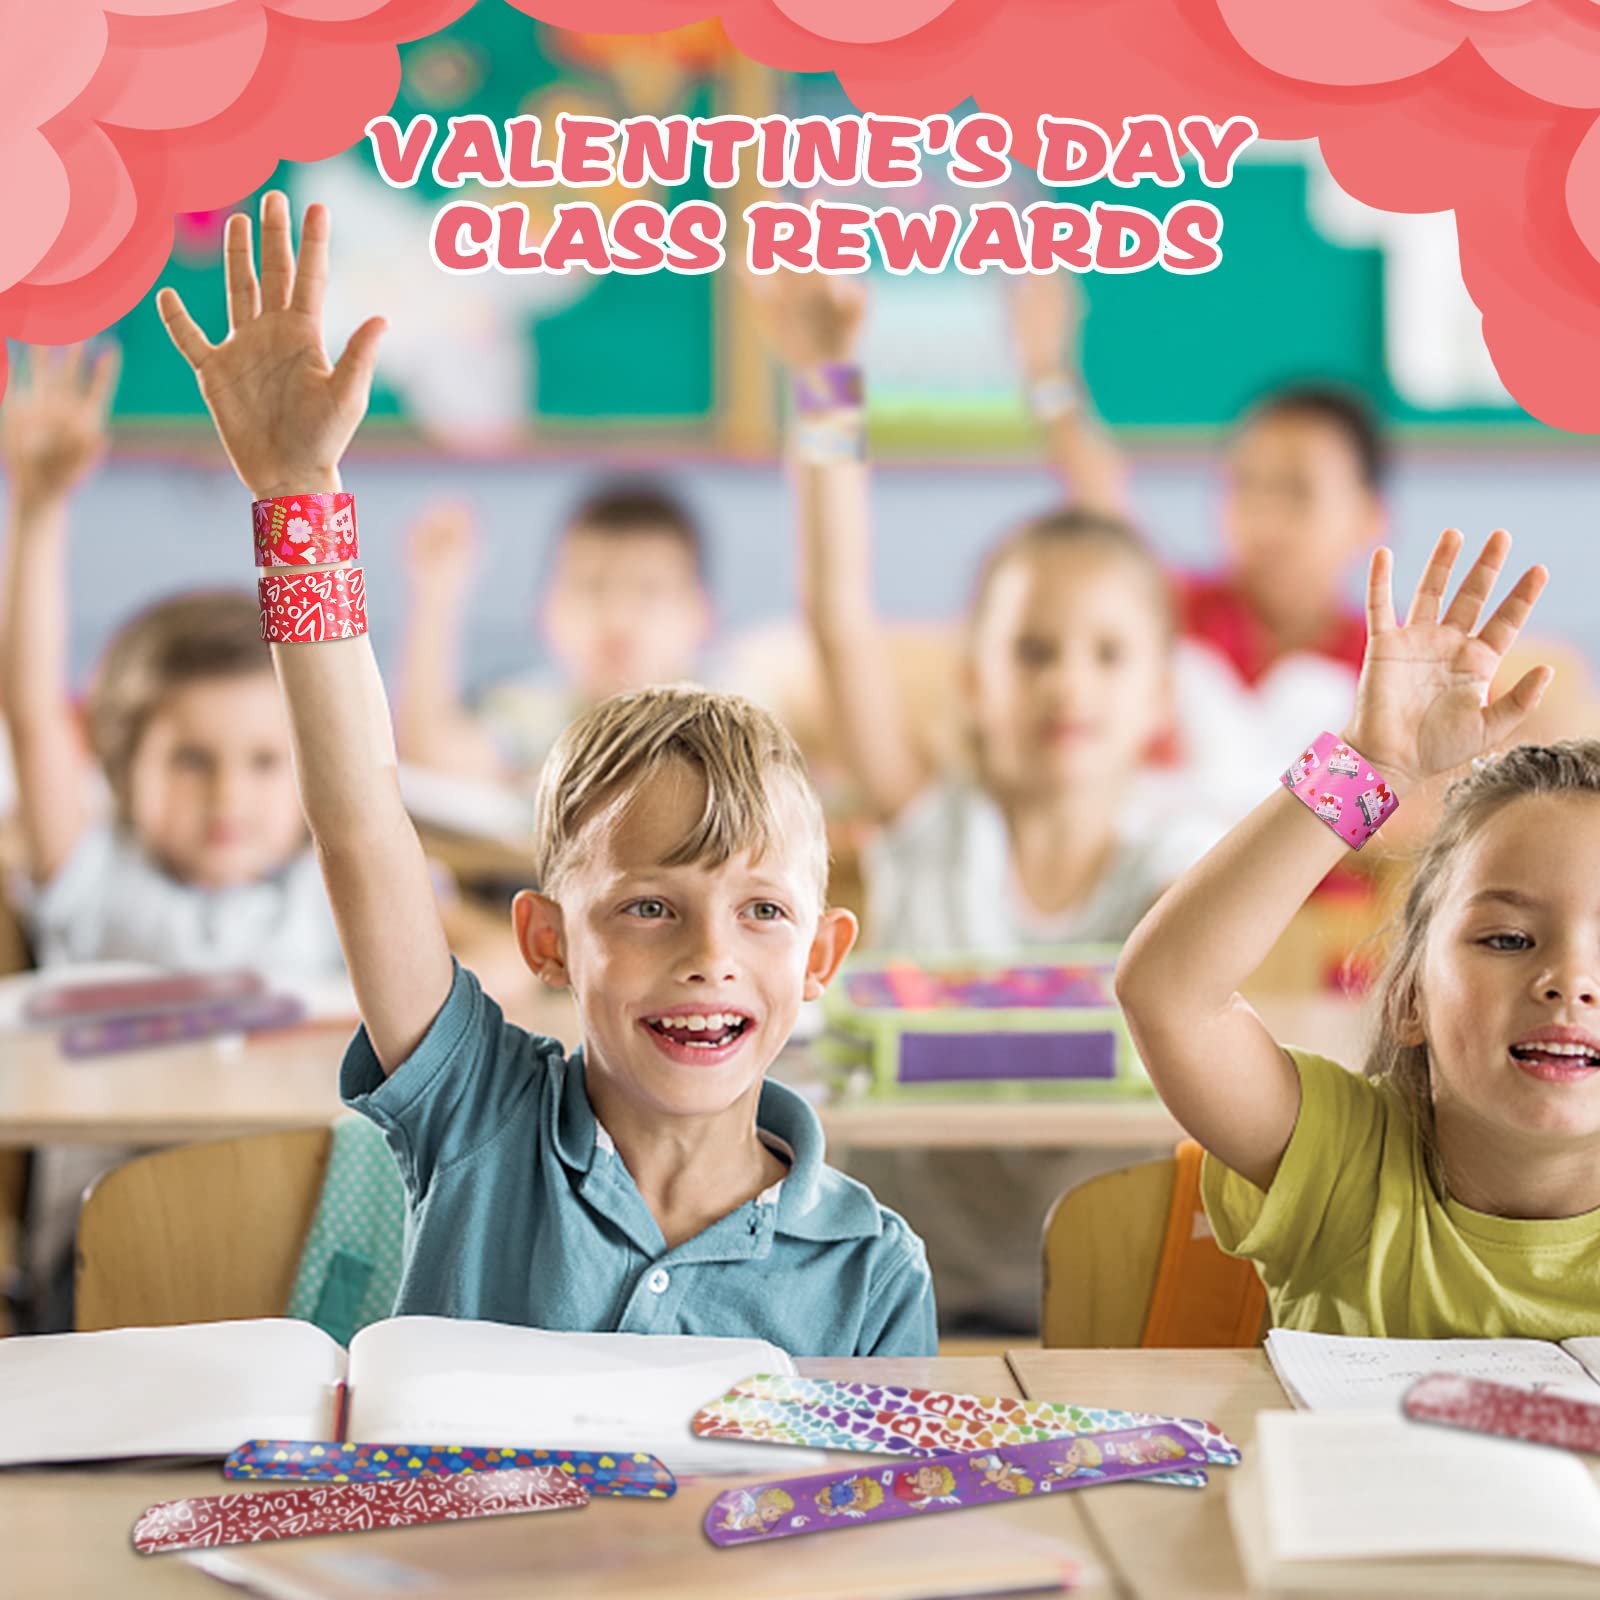 AOYOO 48PCS Valentine's Day Slap Bracelets, Valentines Day Party Favors Colorful Slap Wristbands Valentines Gifts for Kids, Valentines Gifts for Class, 12 Styles